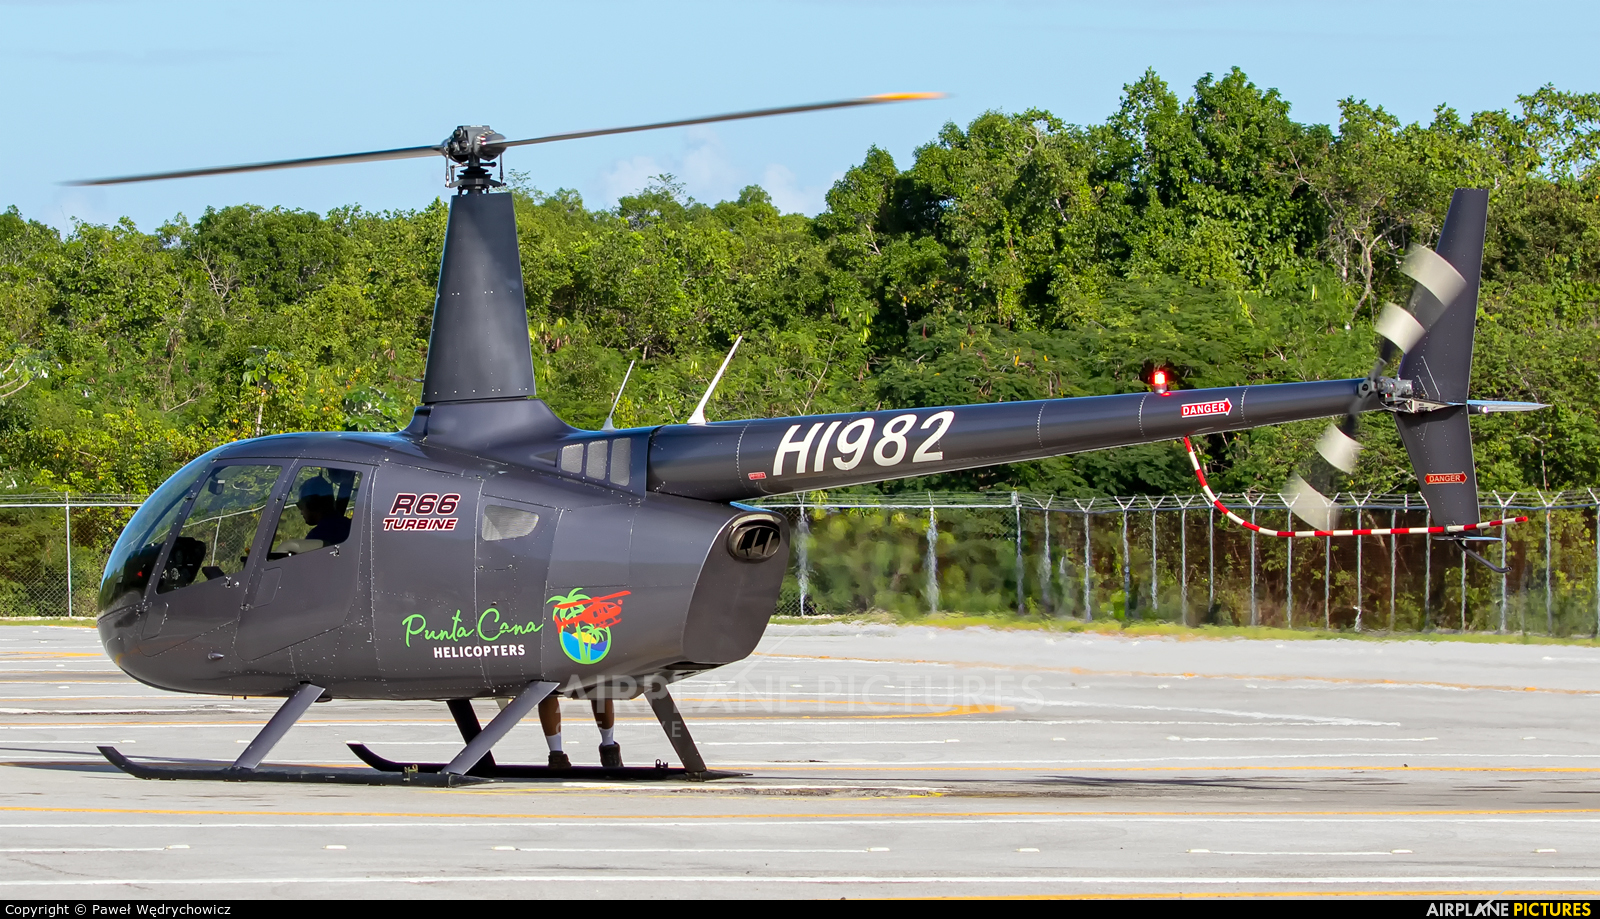 Helidosa Aviation Group HI982 aircraft at Off Airport - Dominican Republic